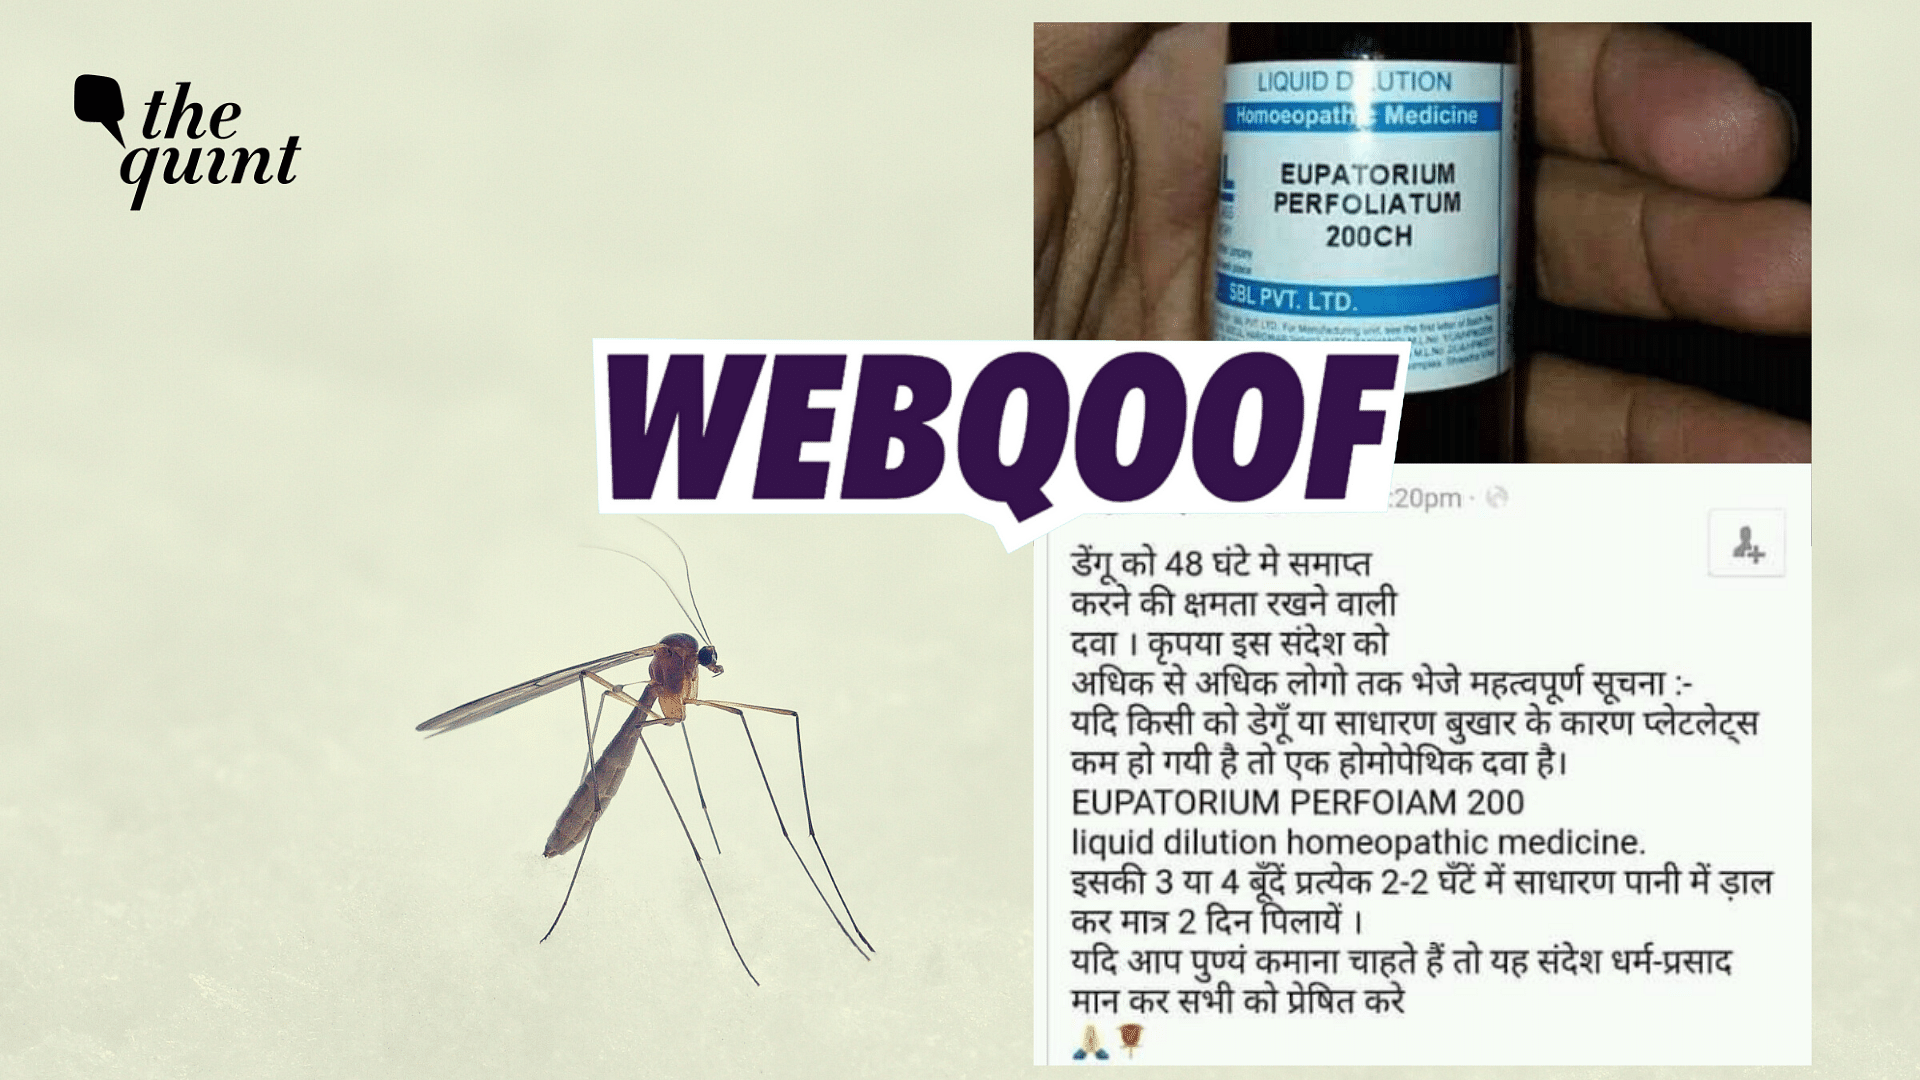 <div class="paragraphs"><p>Fact-Check | The claim that&nbsp;Eupatorium Perfoliatum 200 CH can sure dengue in just two days is false.</p></div>